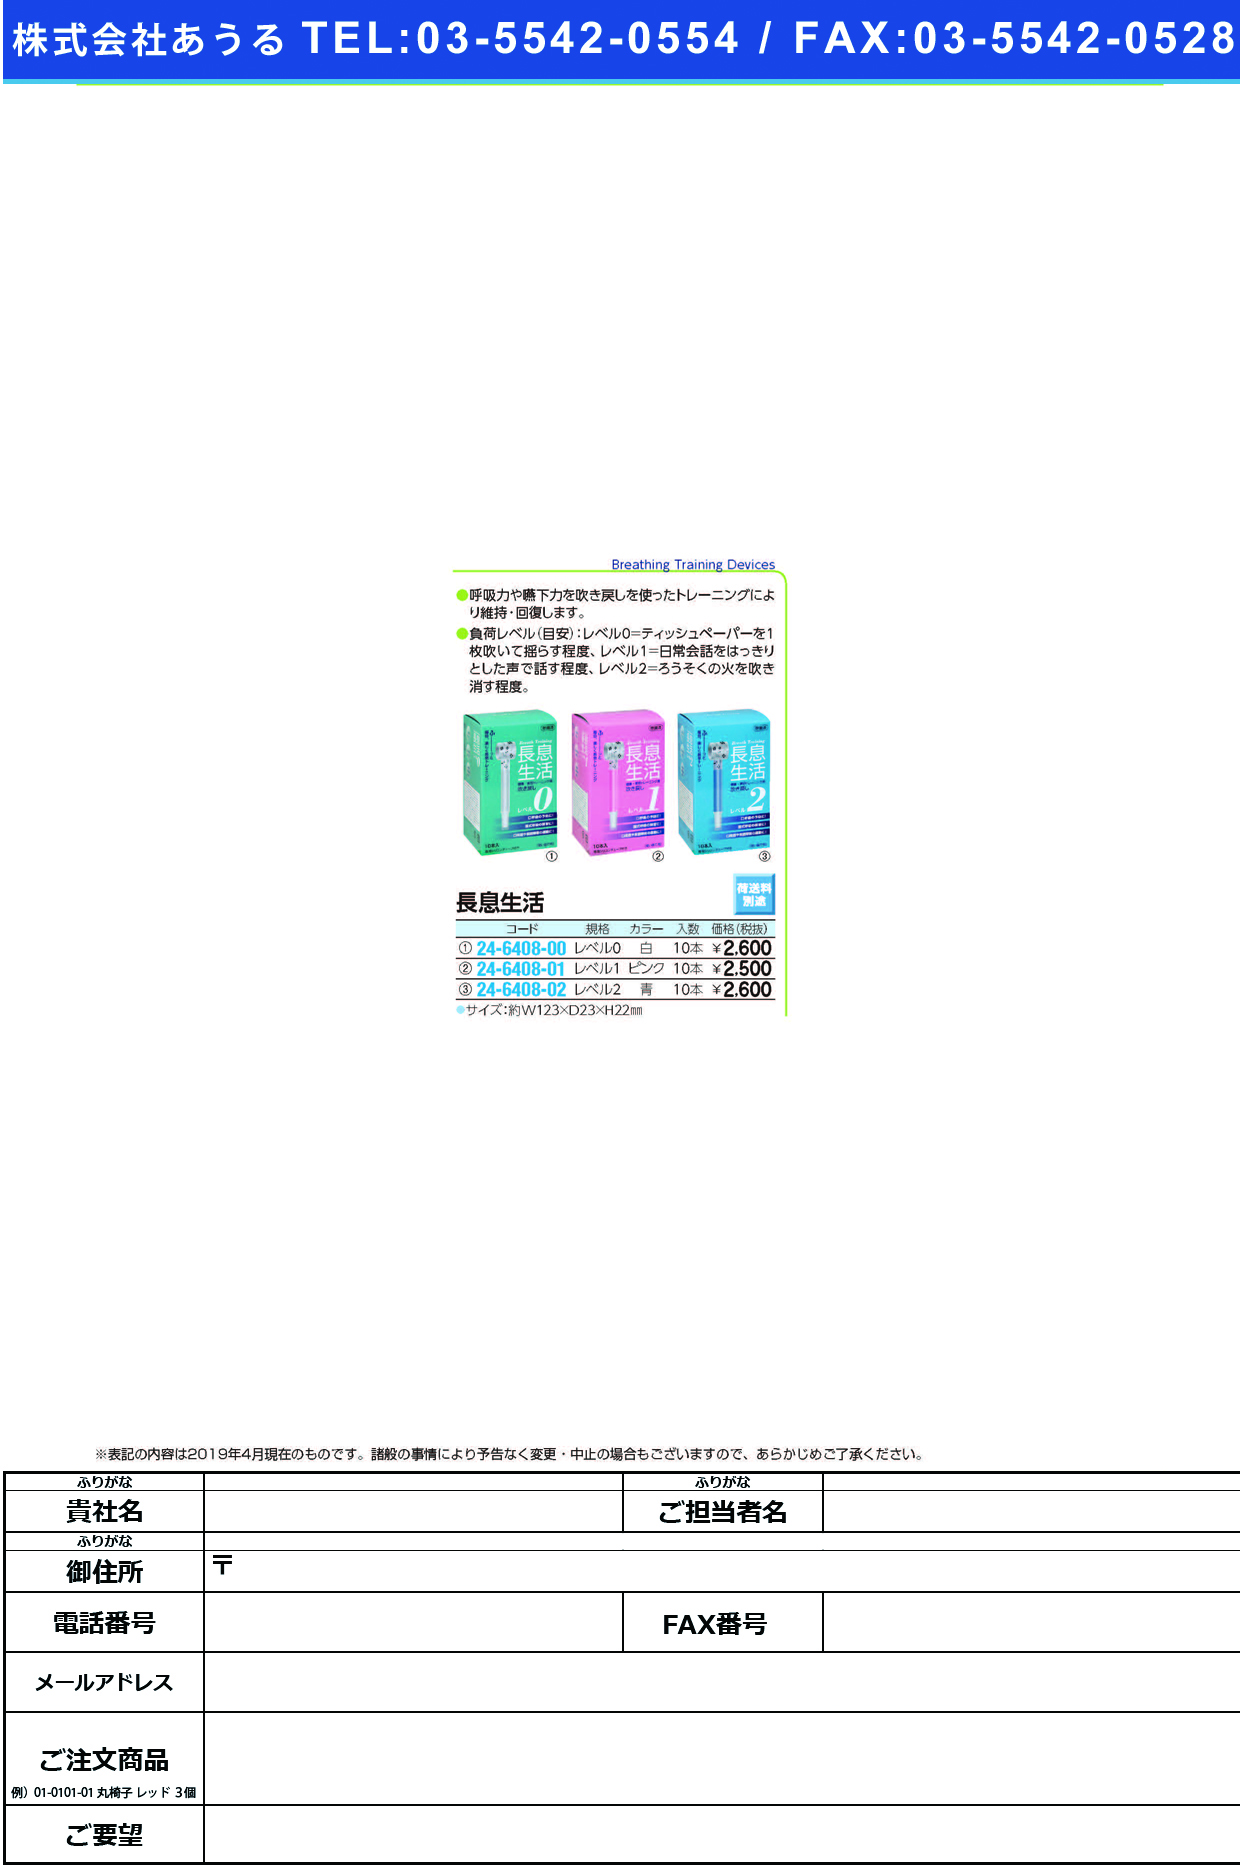 (24-6408-00)長息生活（レベル０）白 10ﾎﾟﾝｲﾘ ﾅｶﾞｲｷｾｲｶﾂ(ﾚﾍﾞﾙ0)ｼﾛ【1箱単位】【2019年カタログ商品】